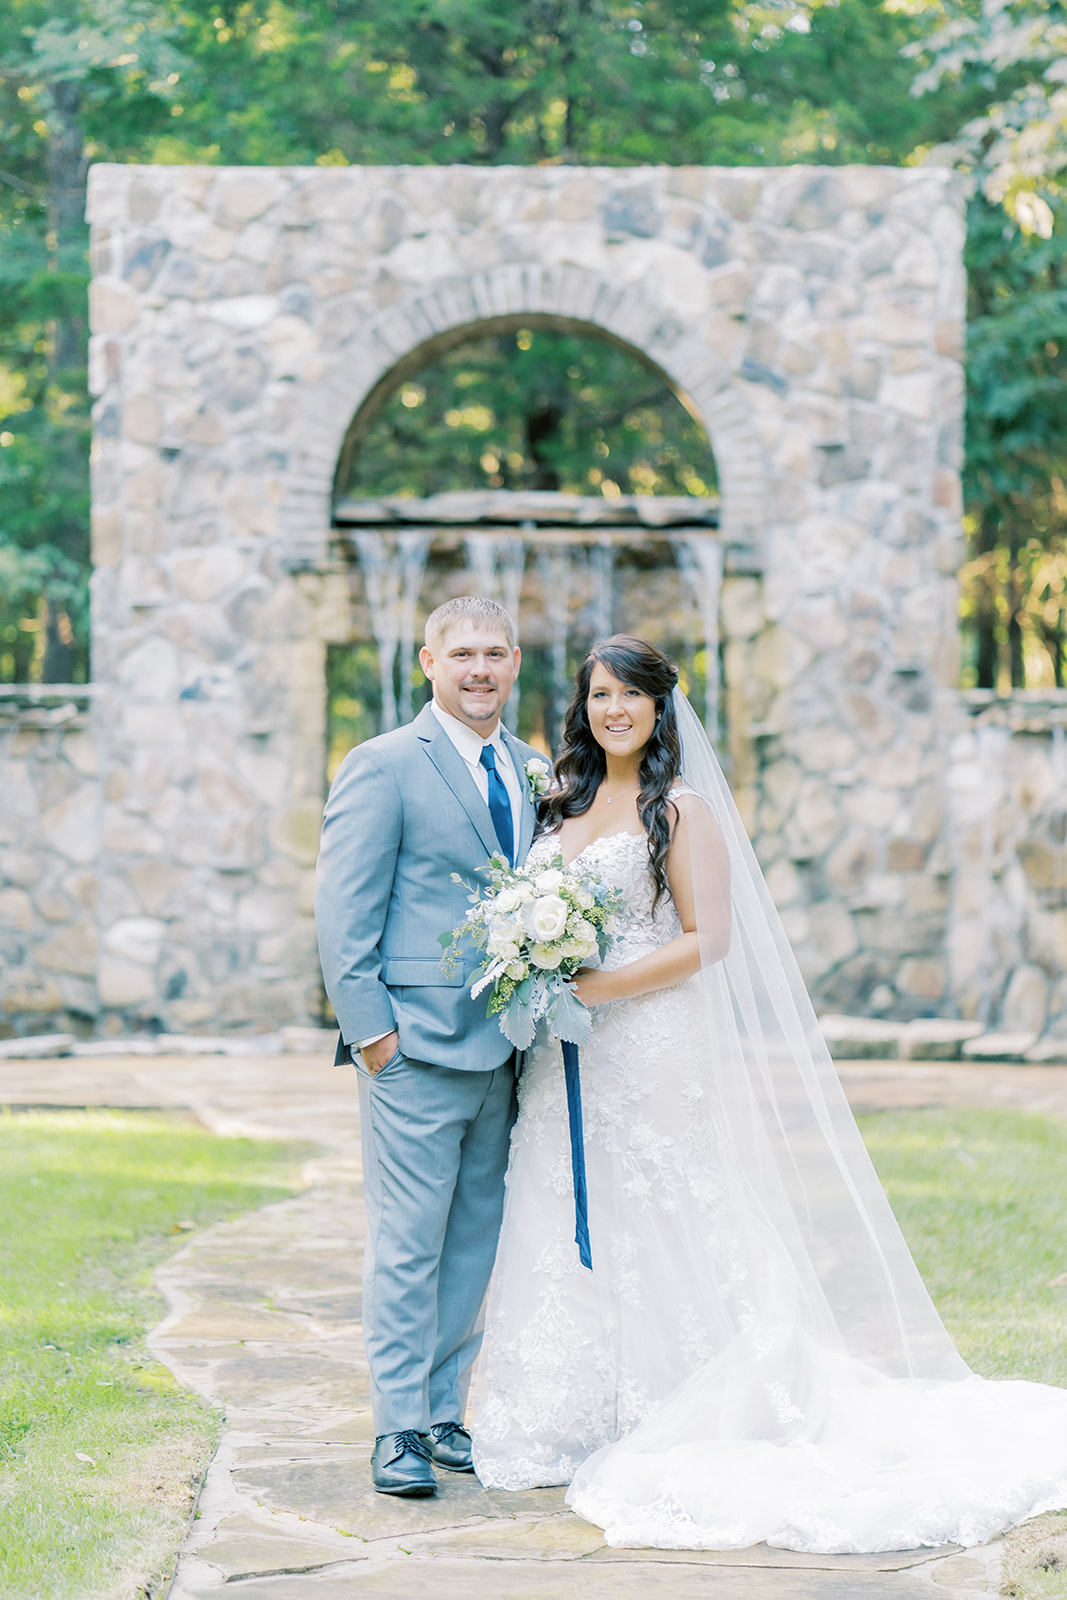 Chelsea Watkins Photography | Nashville Bride Guide